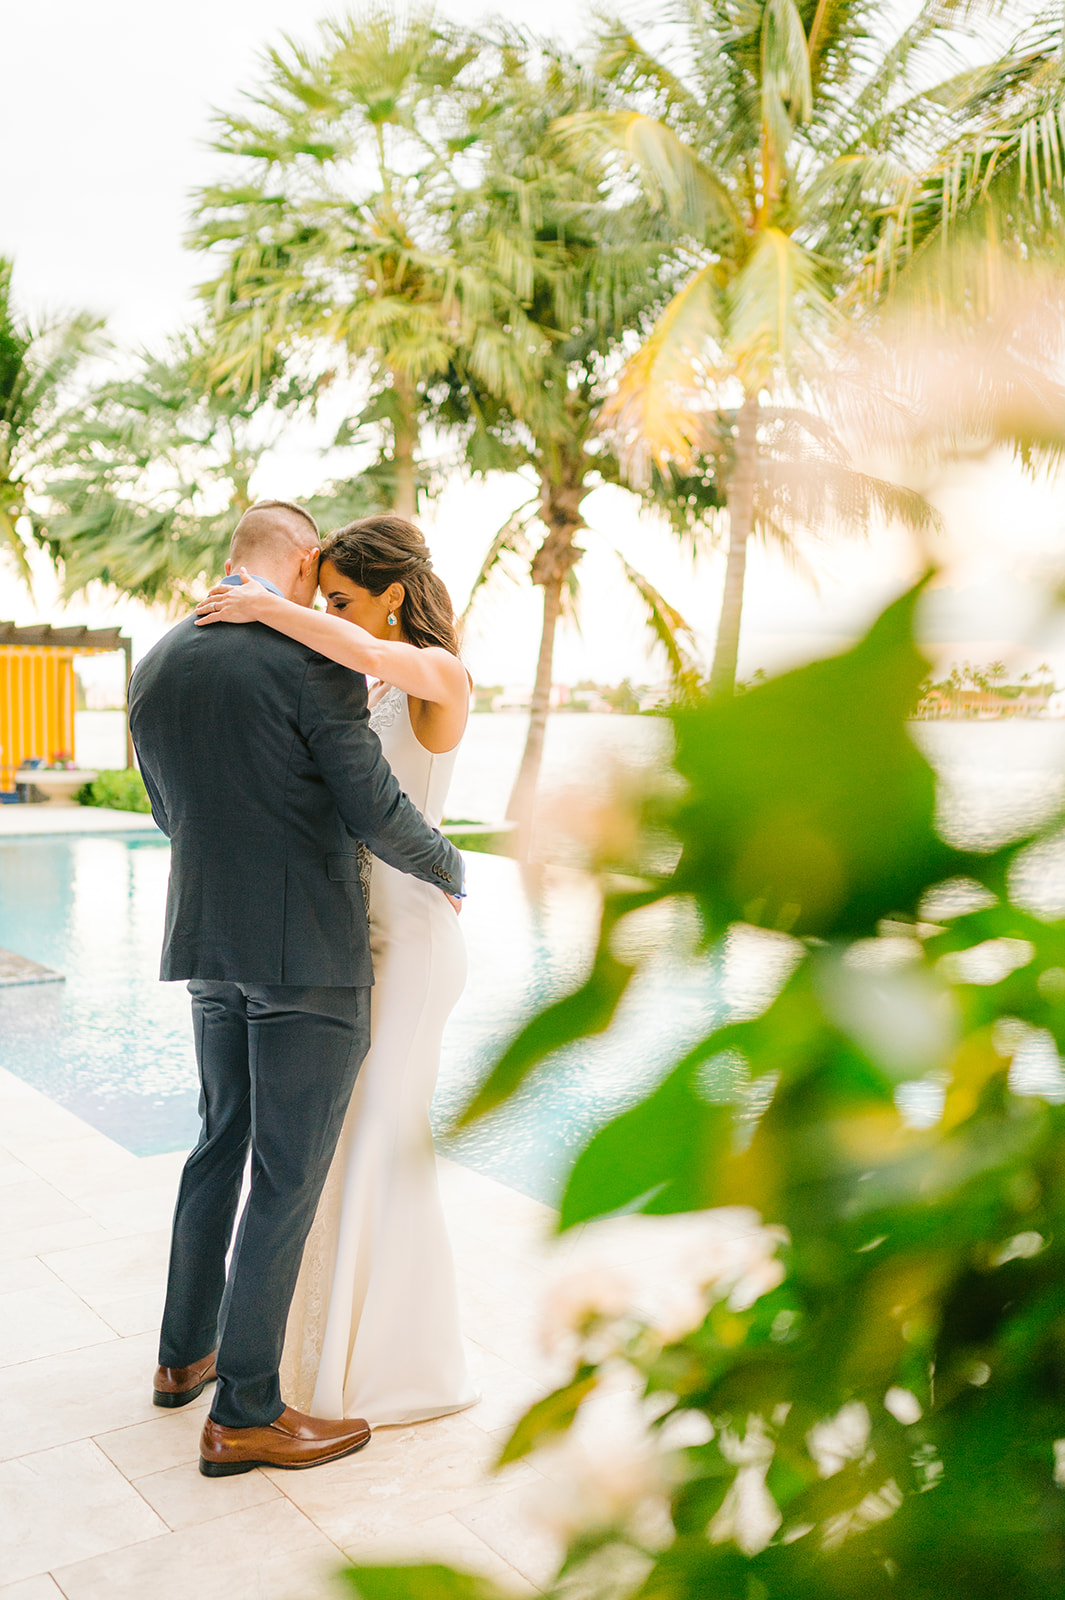 Naples Florida wedding photographer captures the first kiss
